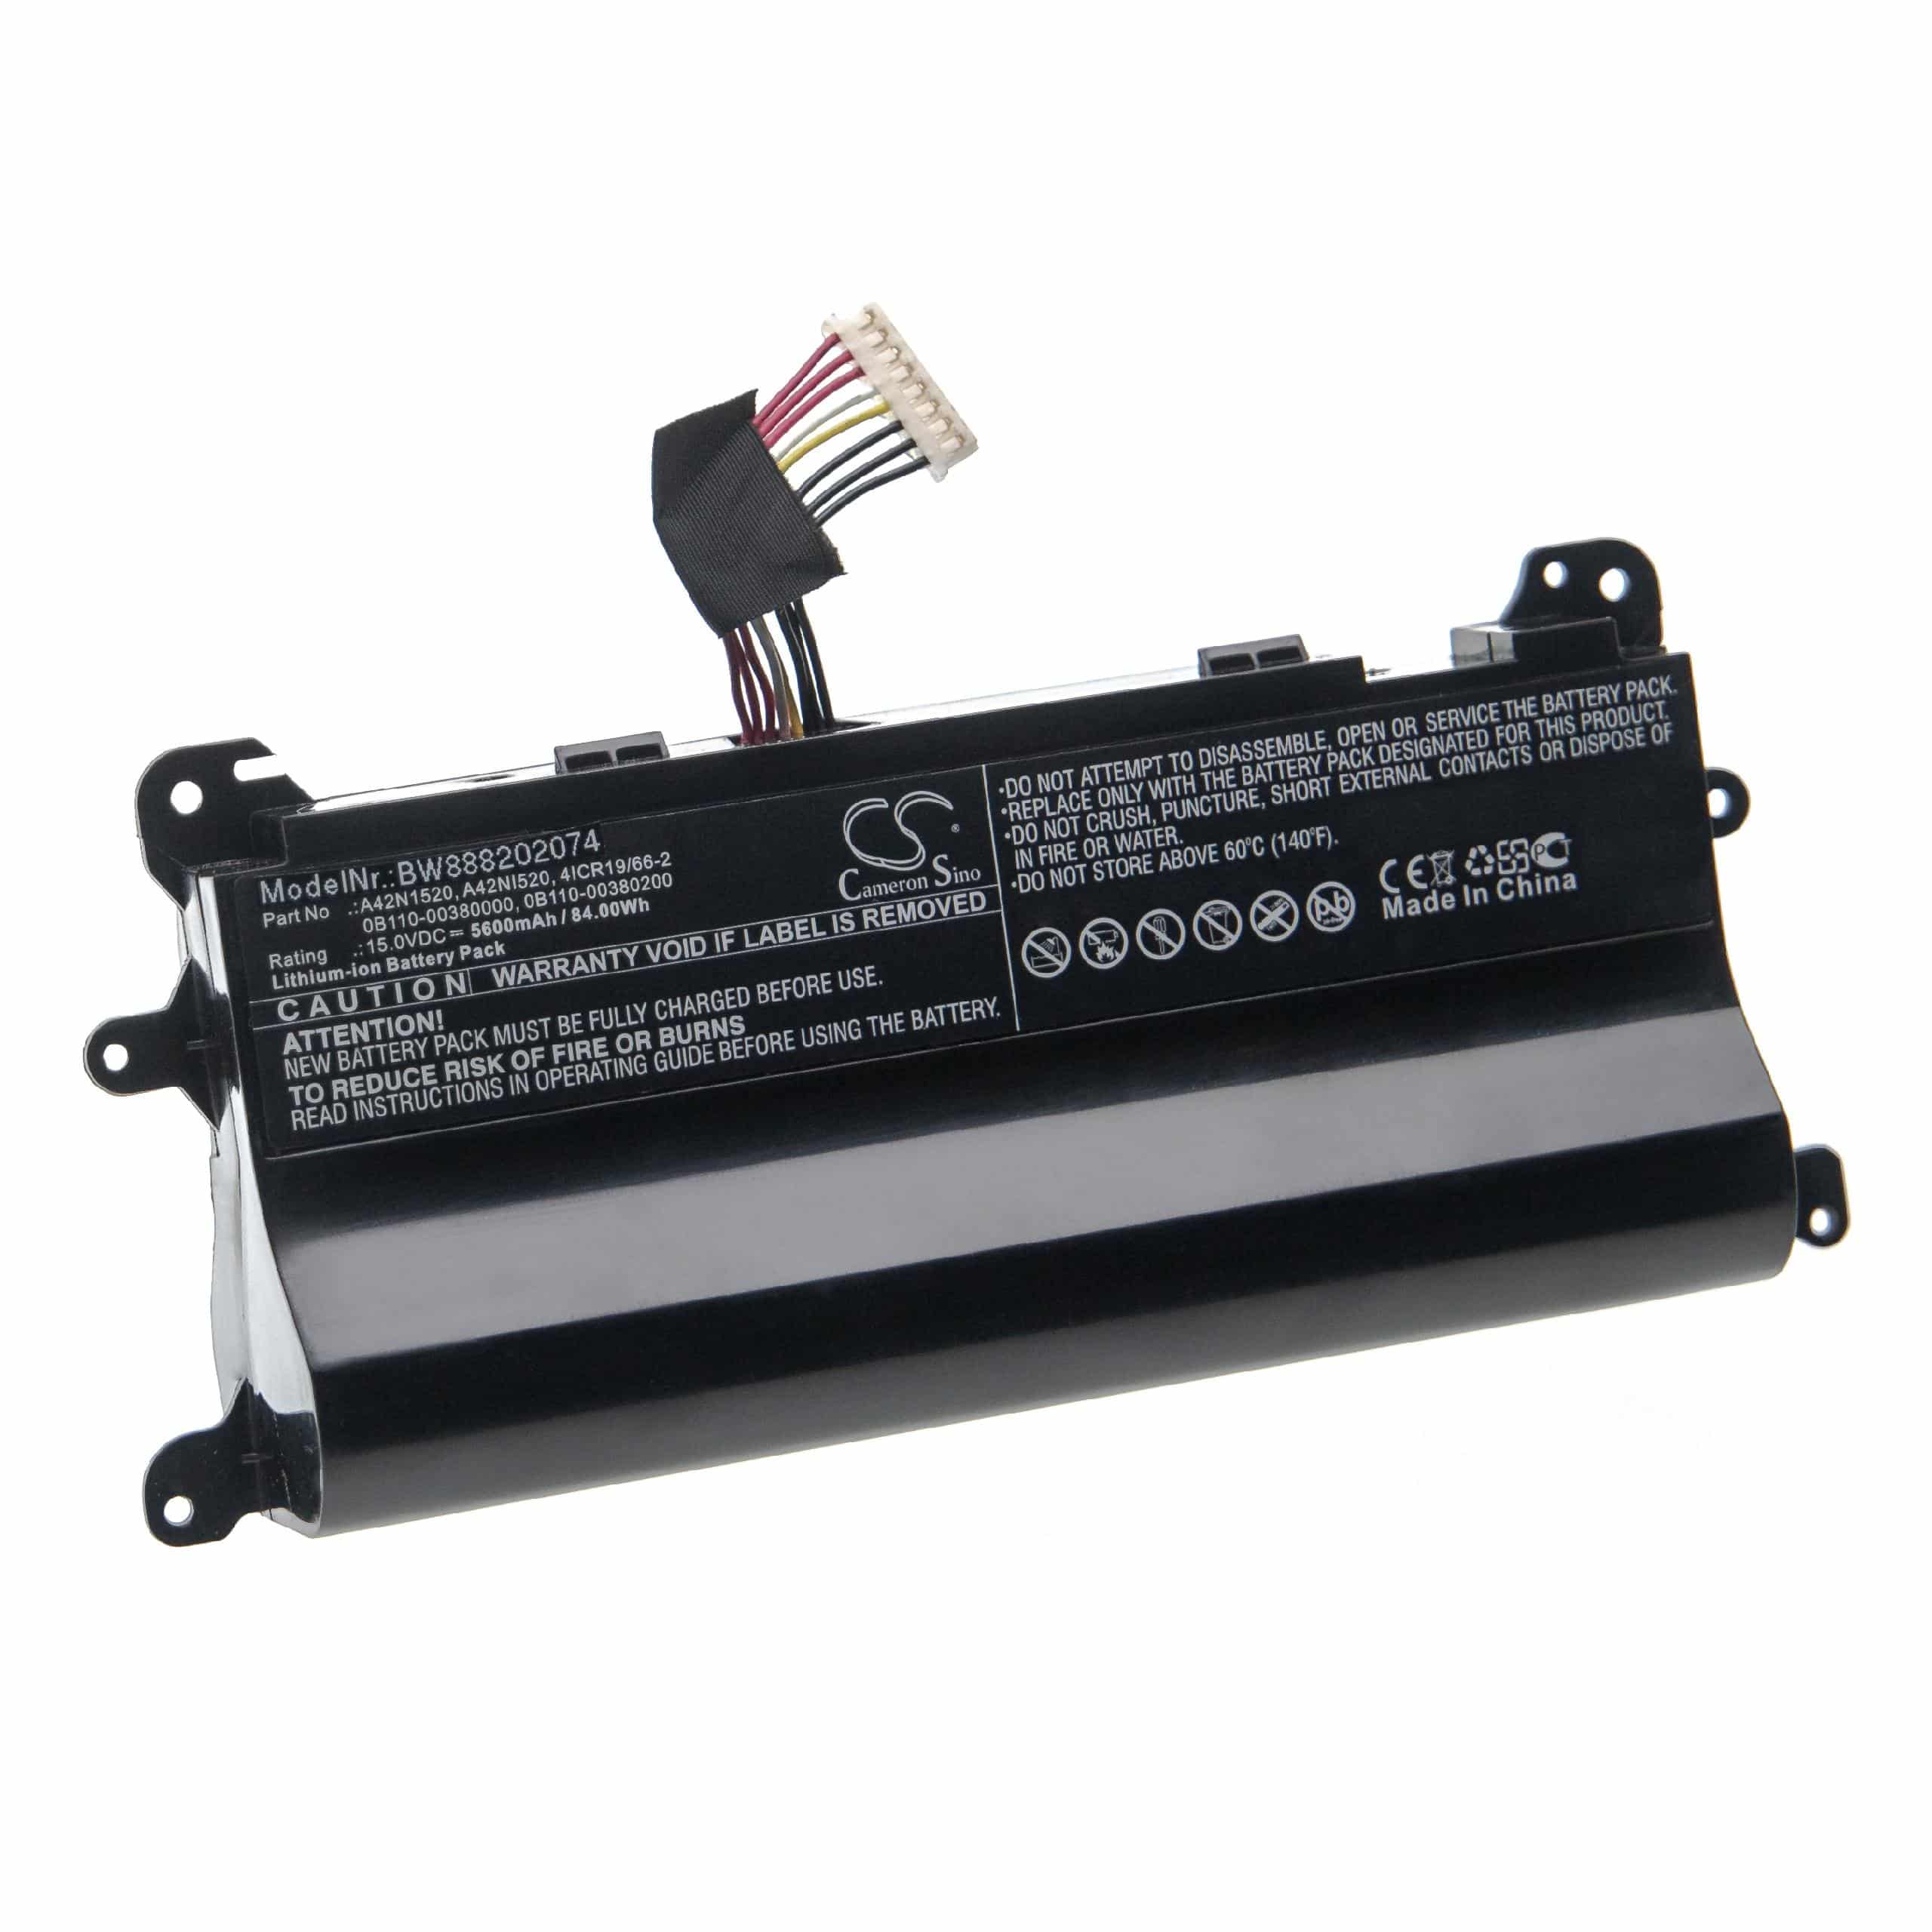 Akumulator do laptopa zamiennik Asus 0B110-00380200, 0B110-00380000 - 5600 mAh 15 V Li-Ion, czarny